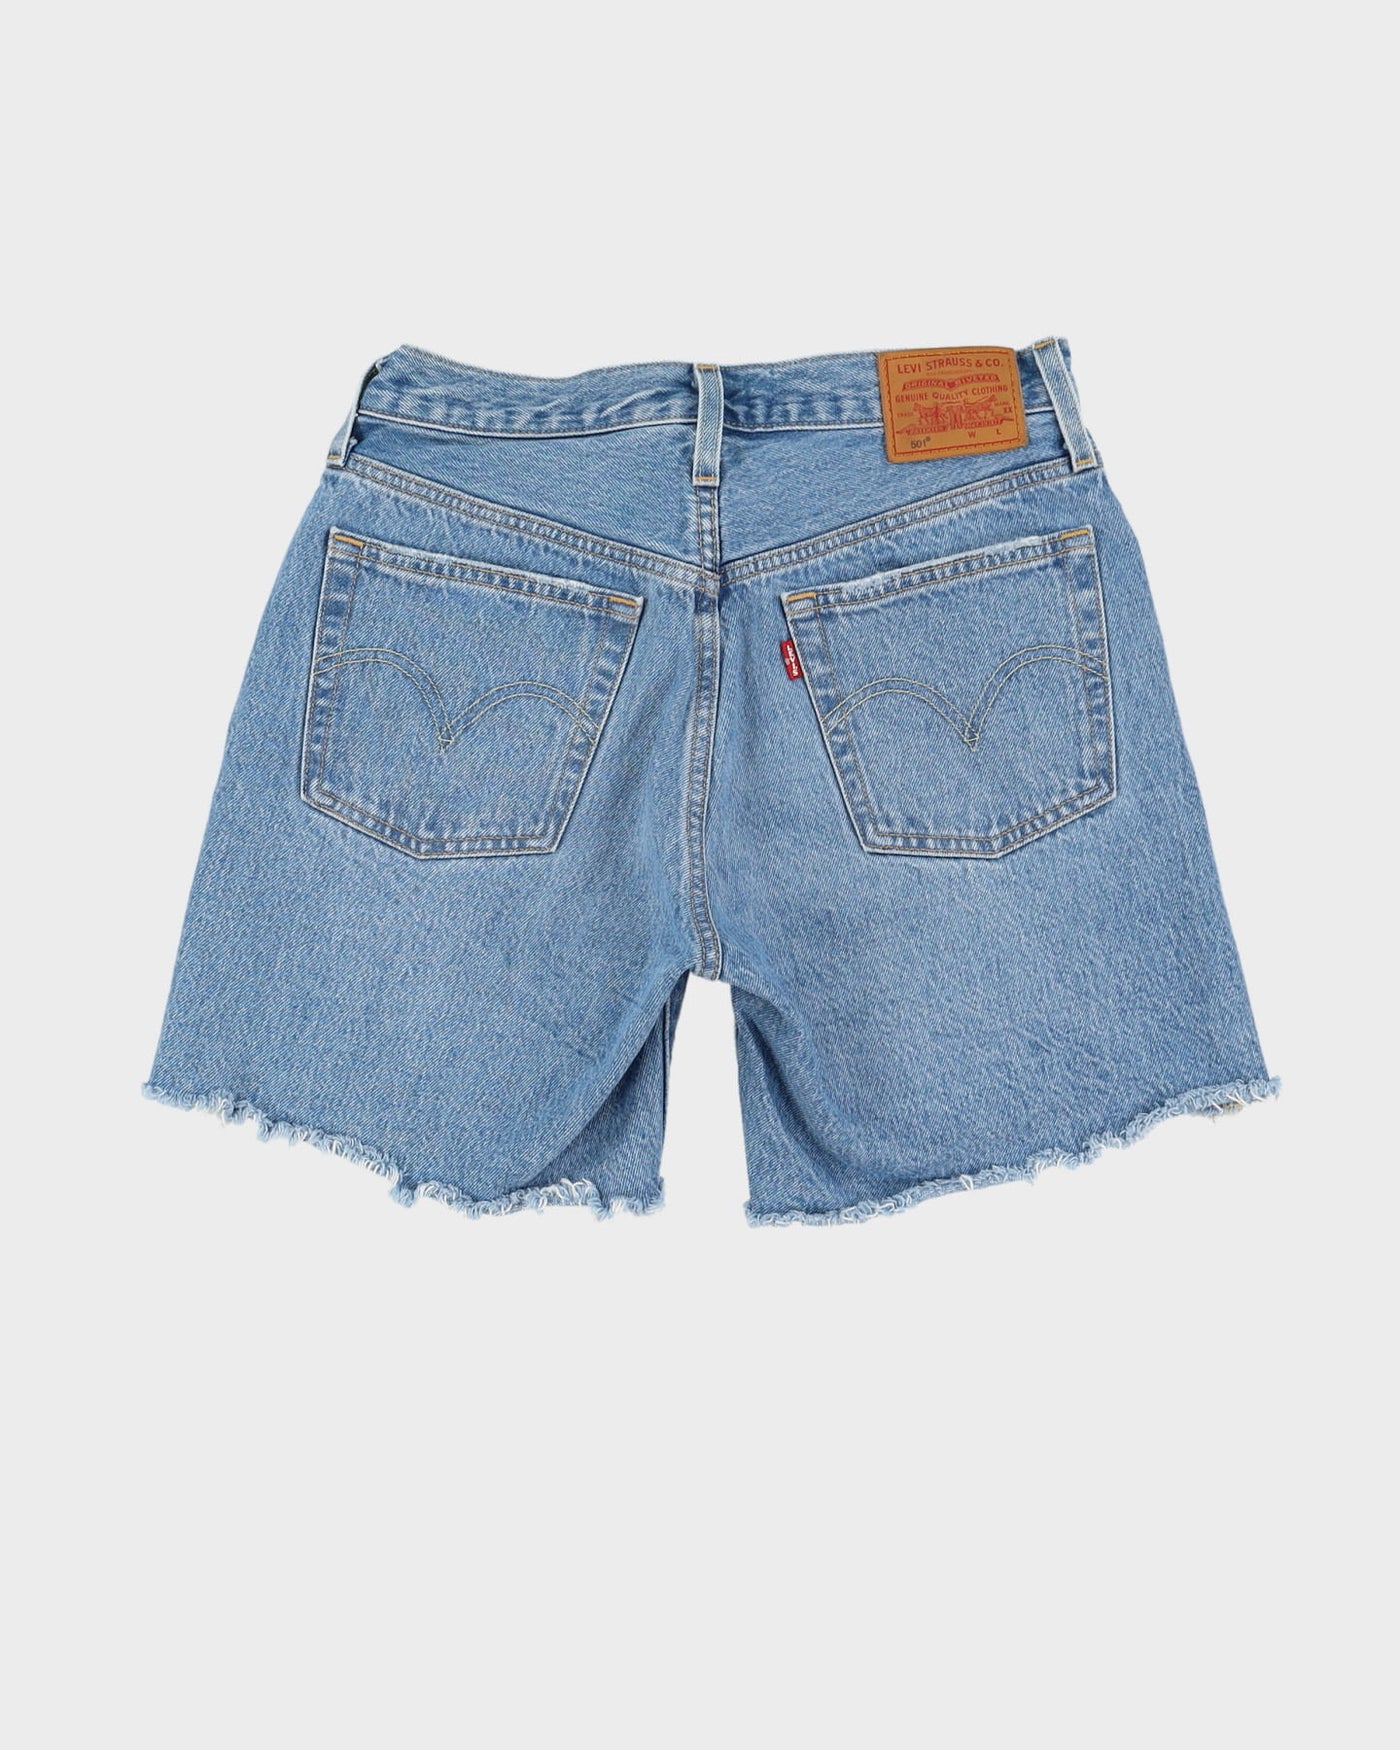 Levi's 501 Big E Blue Denim Shorts - W28